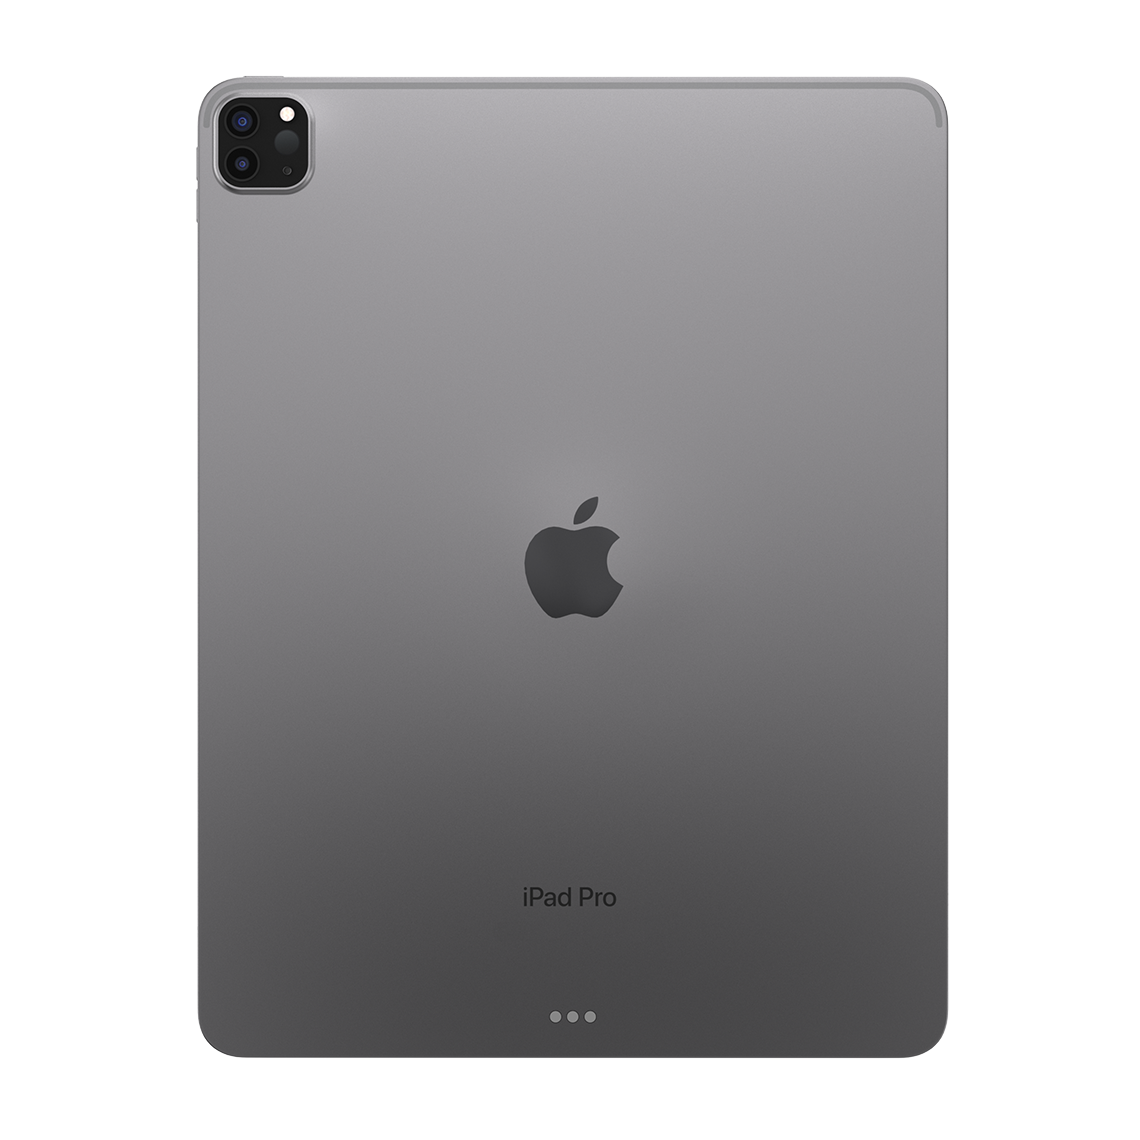 Apple iPad Pro 12.9-inch 5th Generation - Space Gray - 128GB, Wi-Fi + Cellular, Grade A